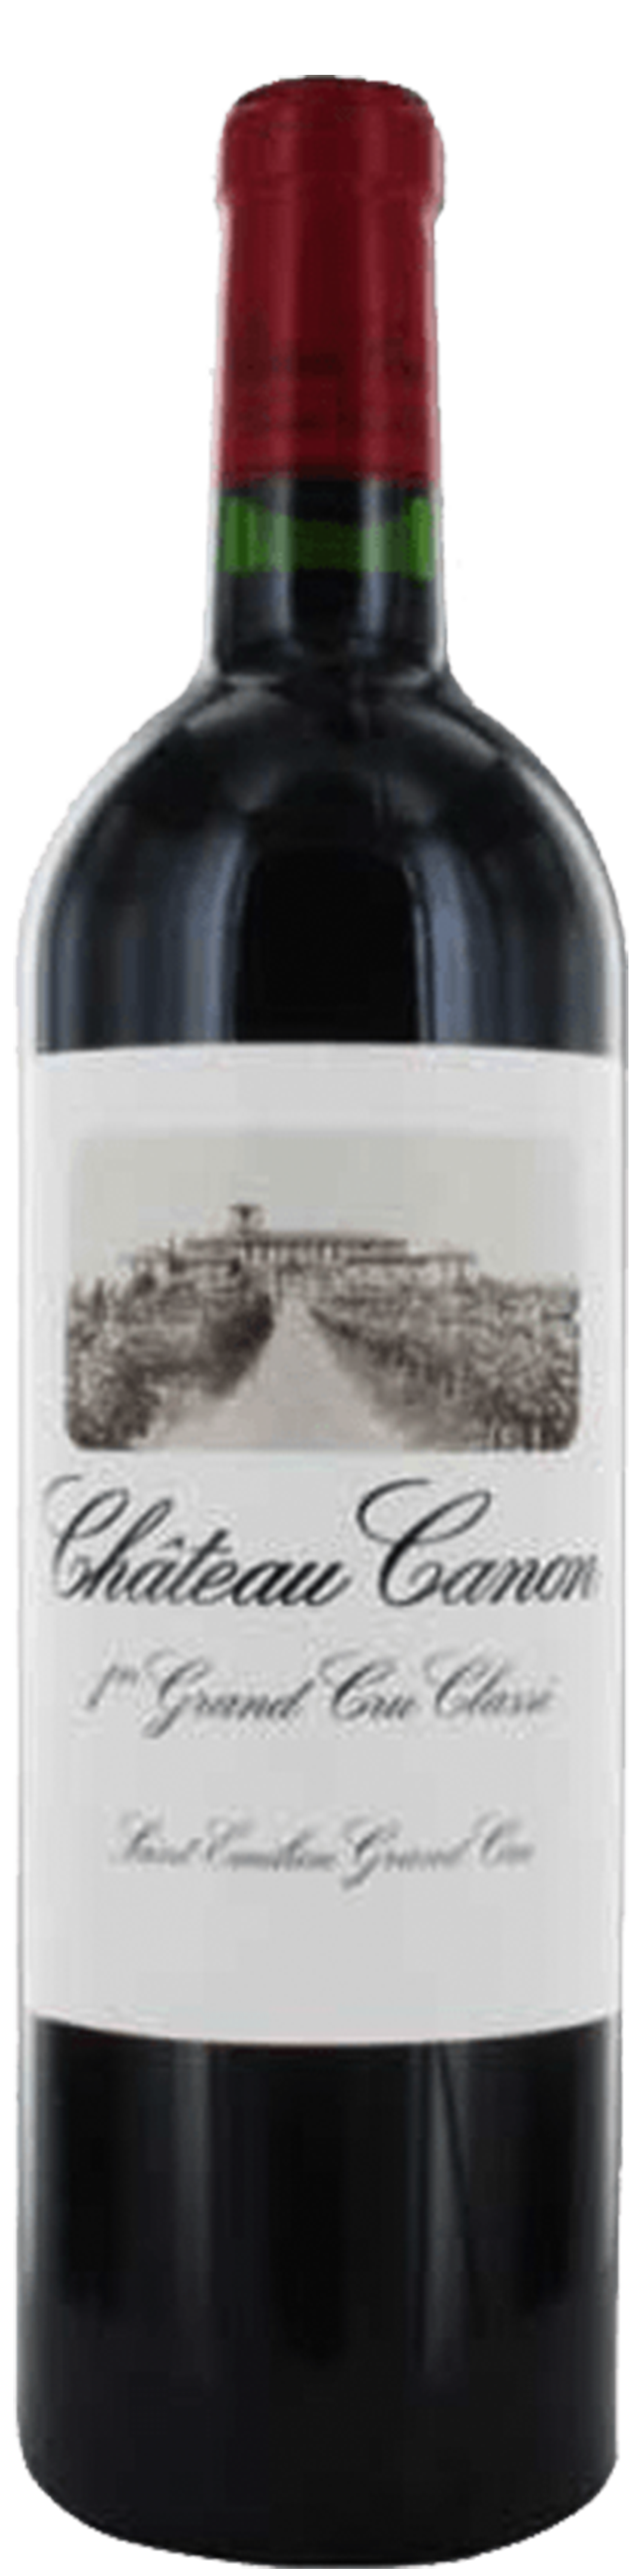 Bottle shot of 2016 Château Canon, 1er Grand Cru St Emilion